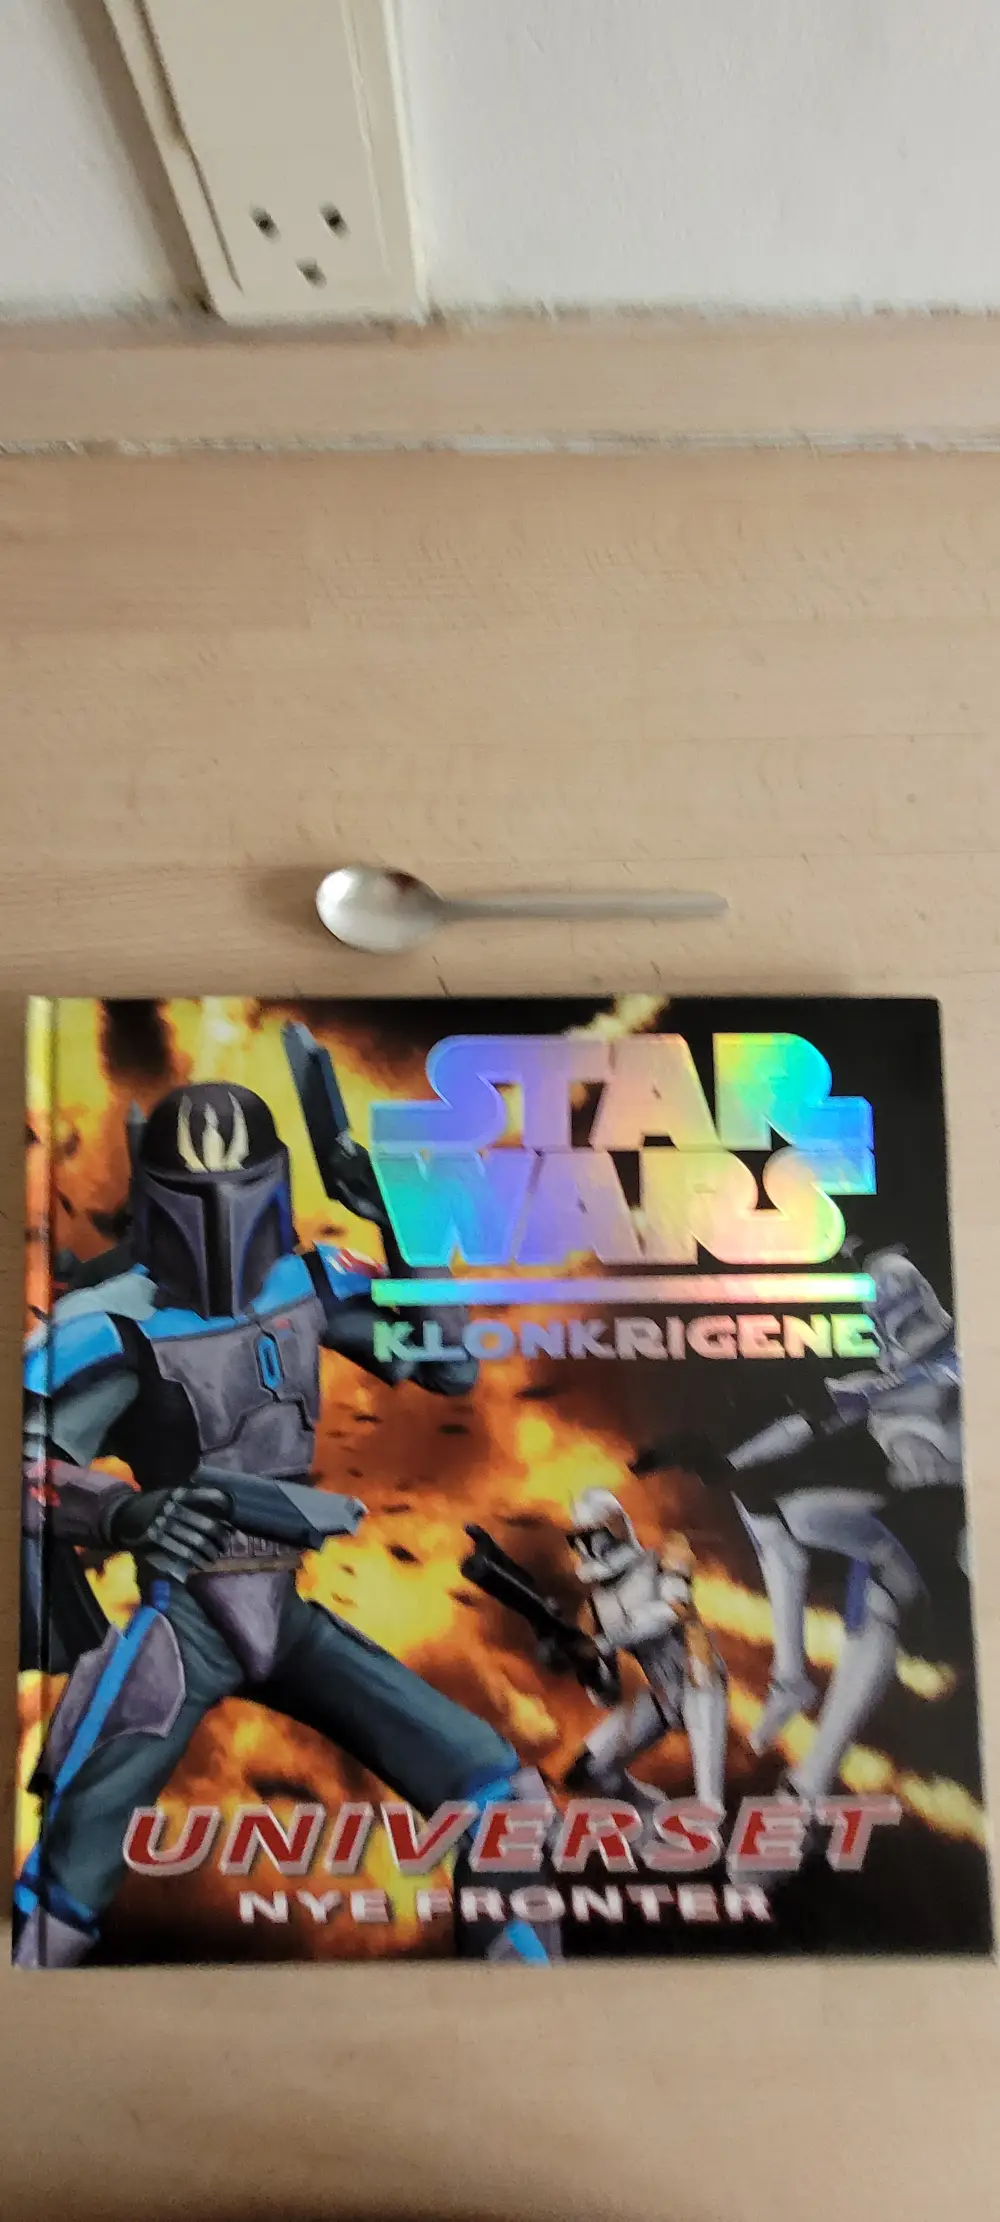 Star Wars -Klonkrigene Billedbog